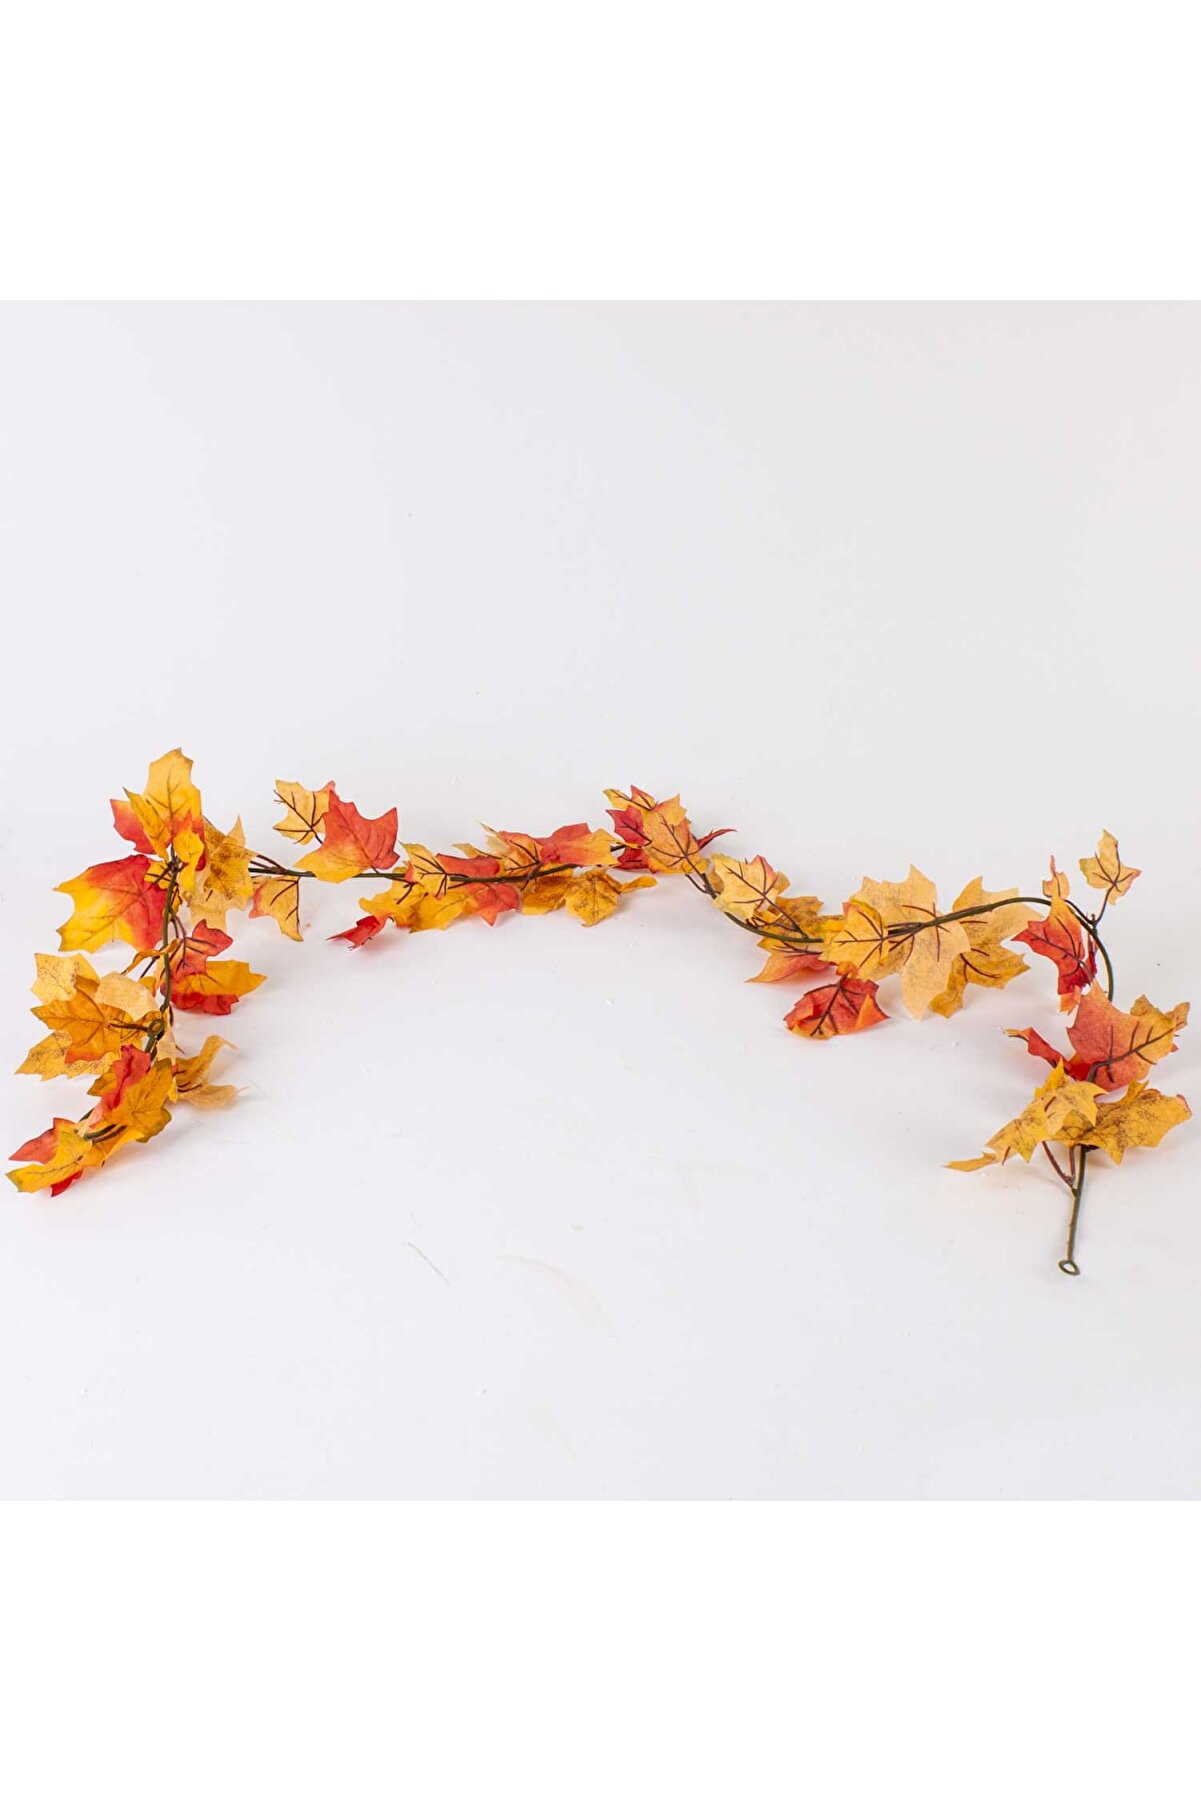 Euro Flora Yapay Sarmaşık Sonbahar (Maple) 180 cm